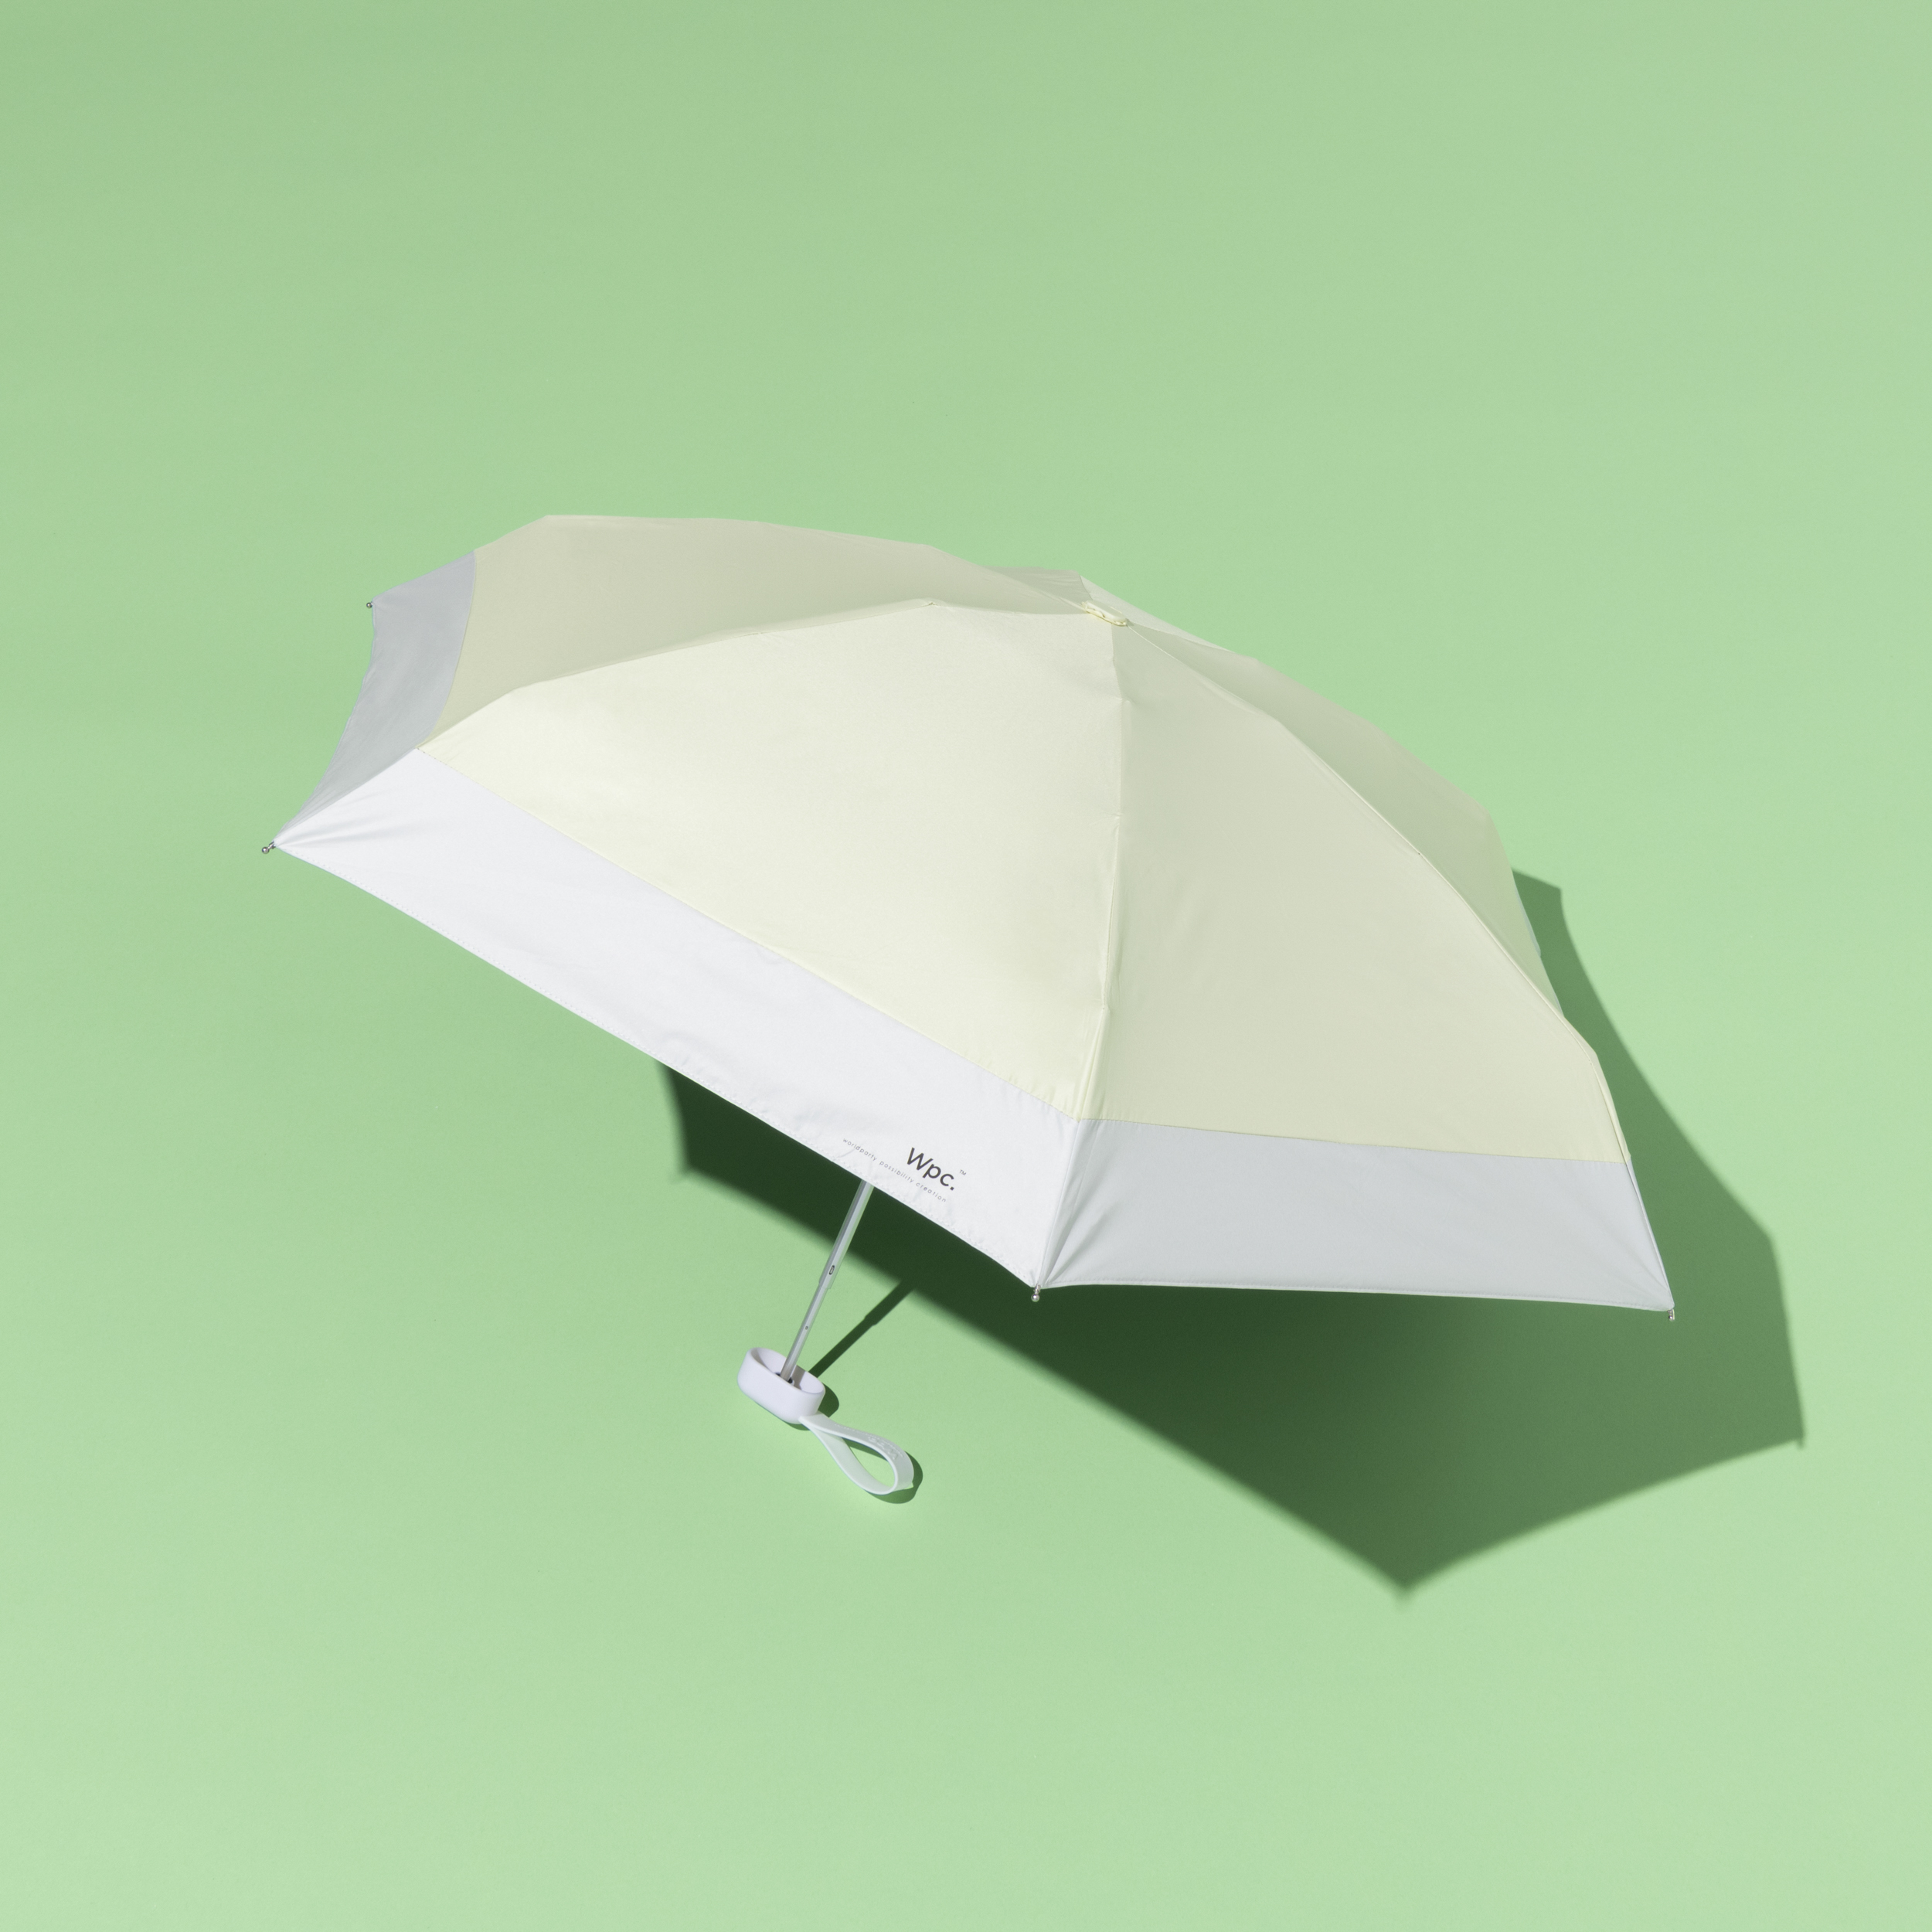 Wpcの日傘の撮りおろし画像